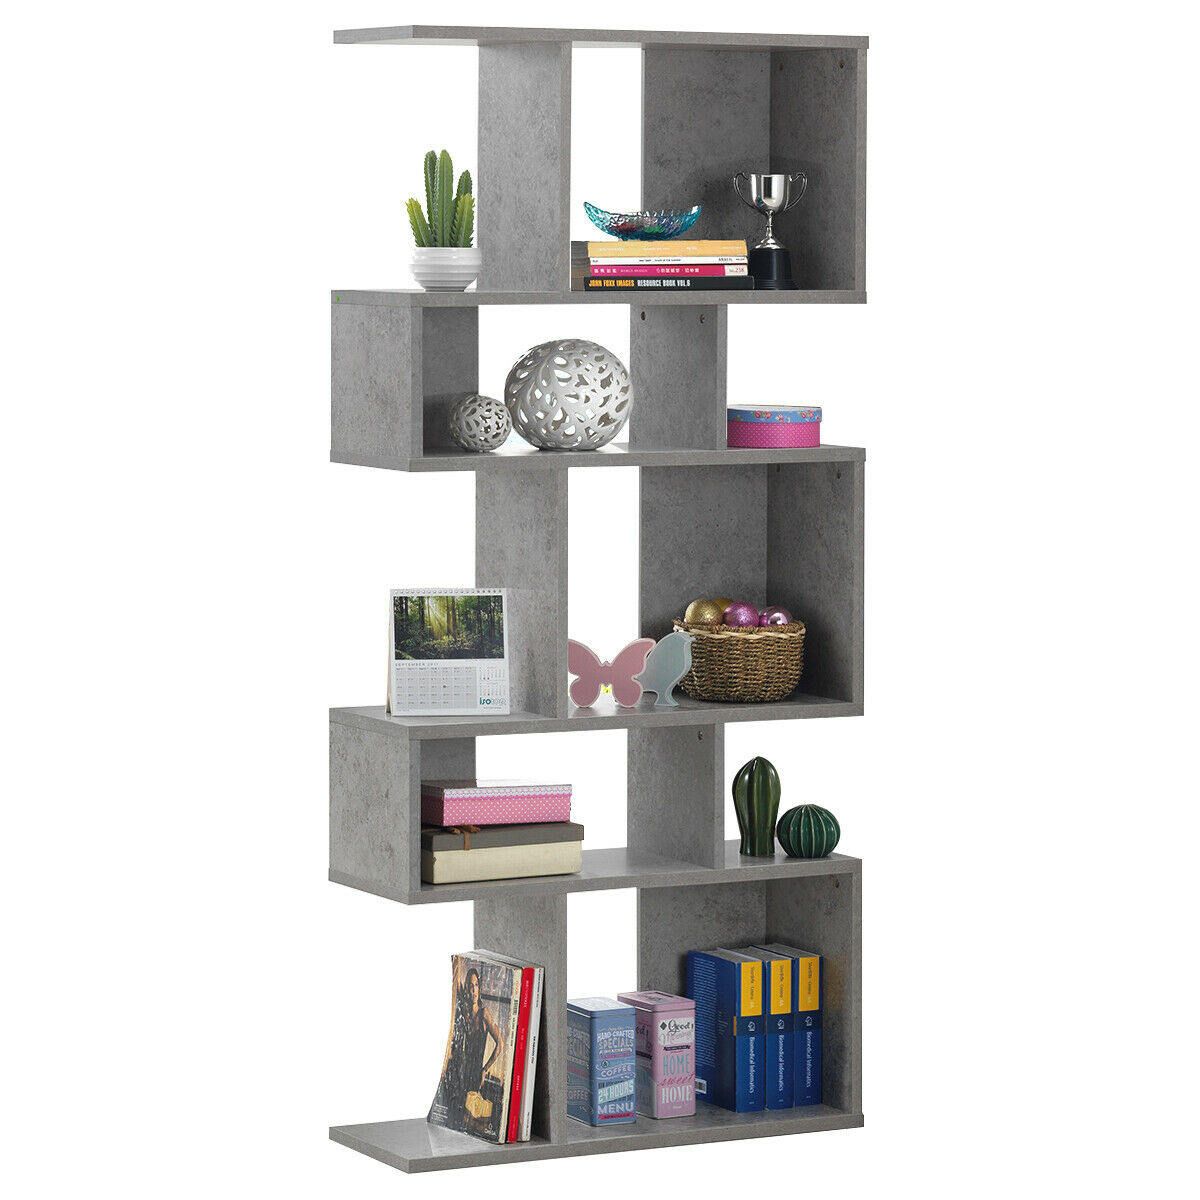 5 Cubes Ladder Shelf Freestanding Corner Bookshelf Display Rack Bookcase - Gray